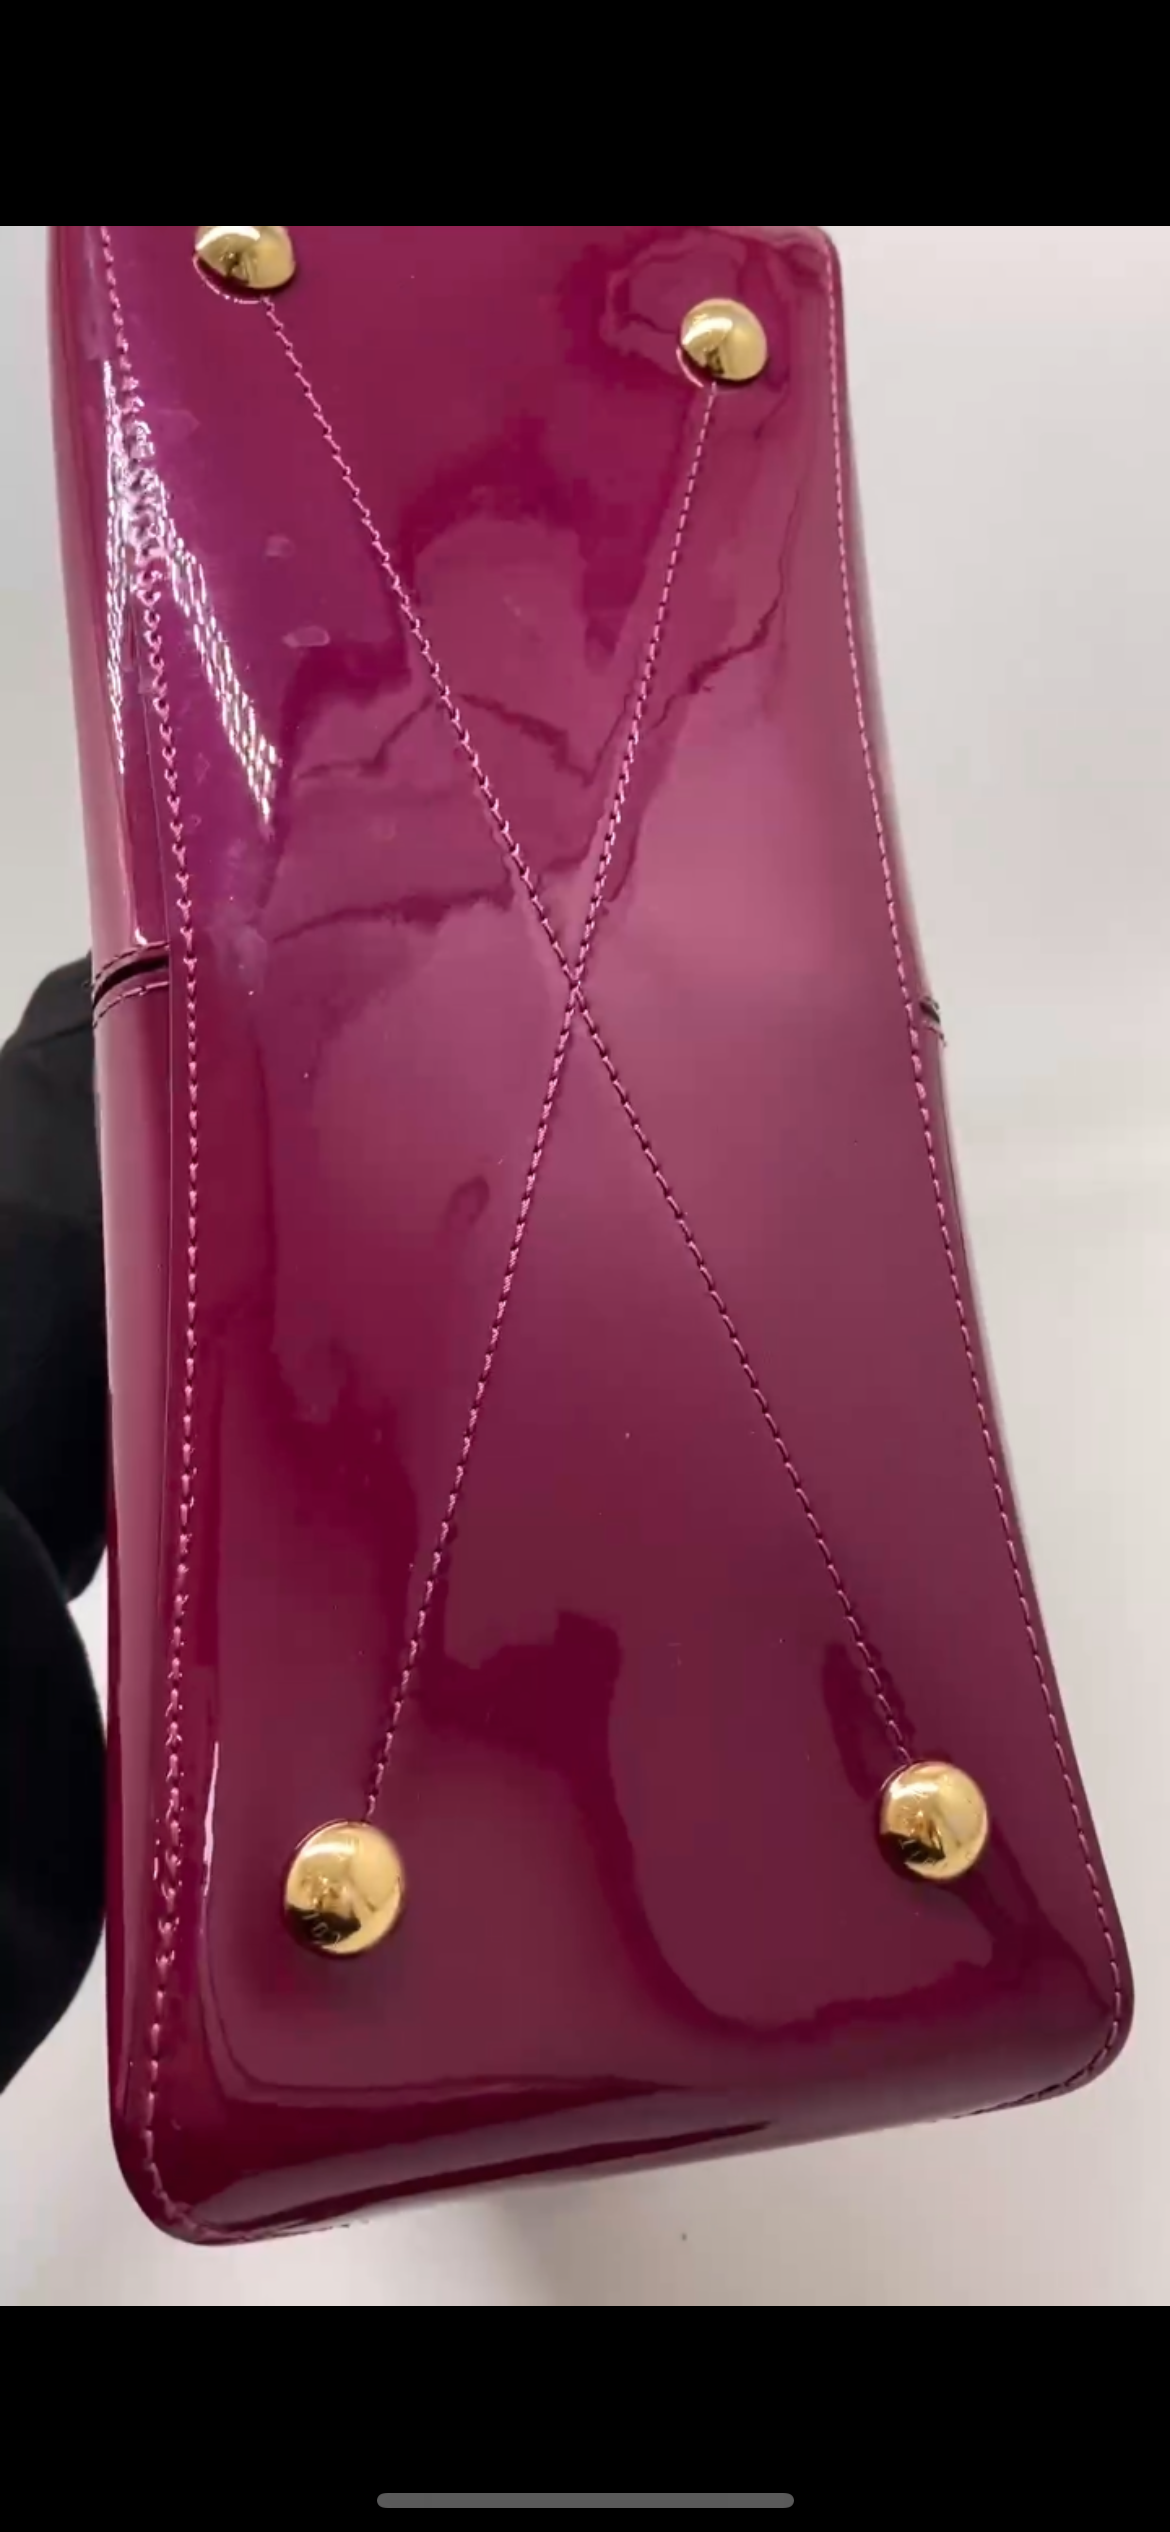 preloved louis vuitton purple purse